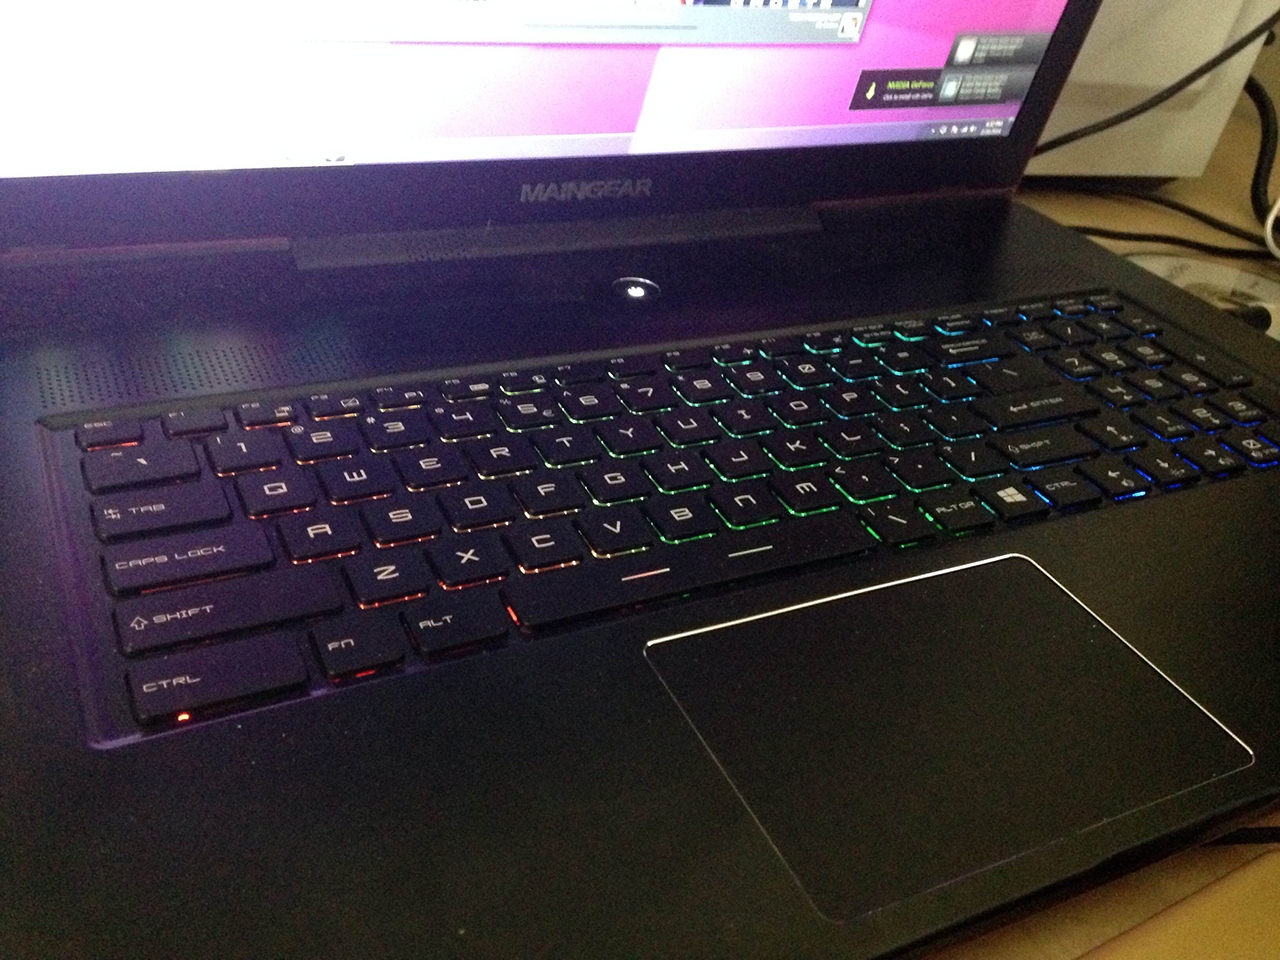 Maingear Pulse 17 Ultra-Thin Gaming Laptop: The Kotaku Review